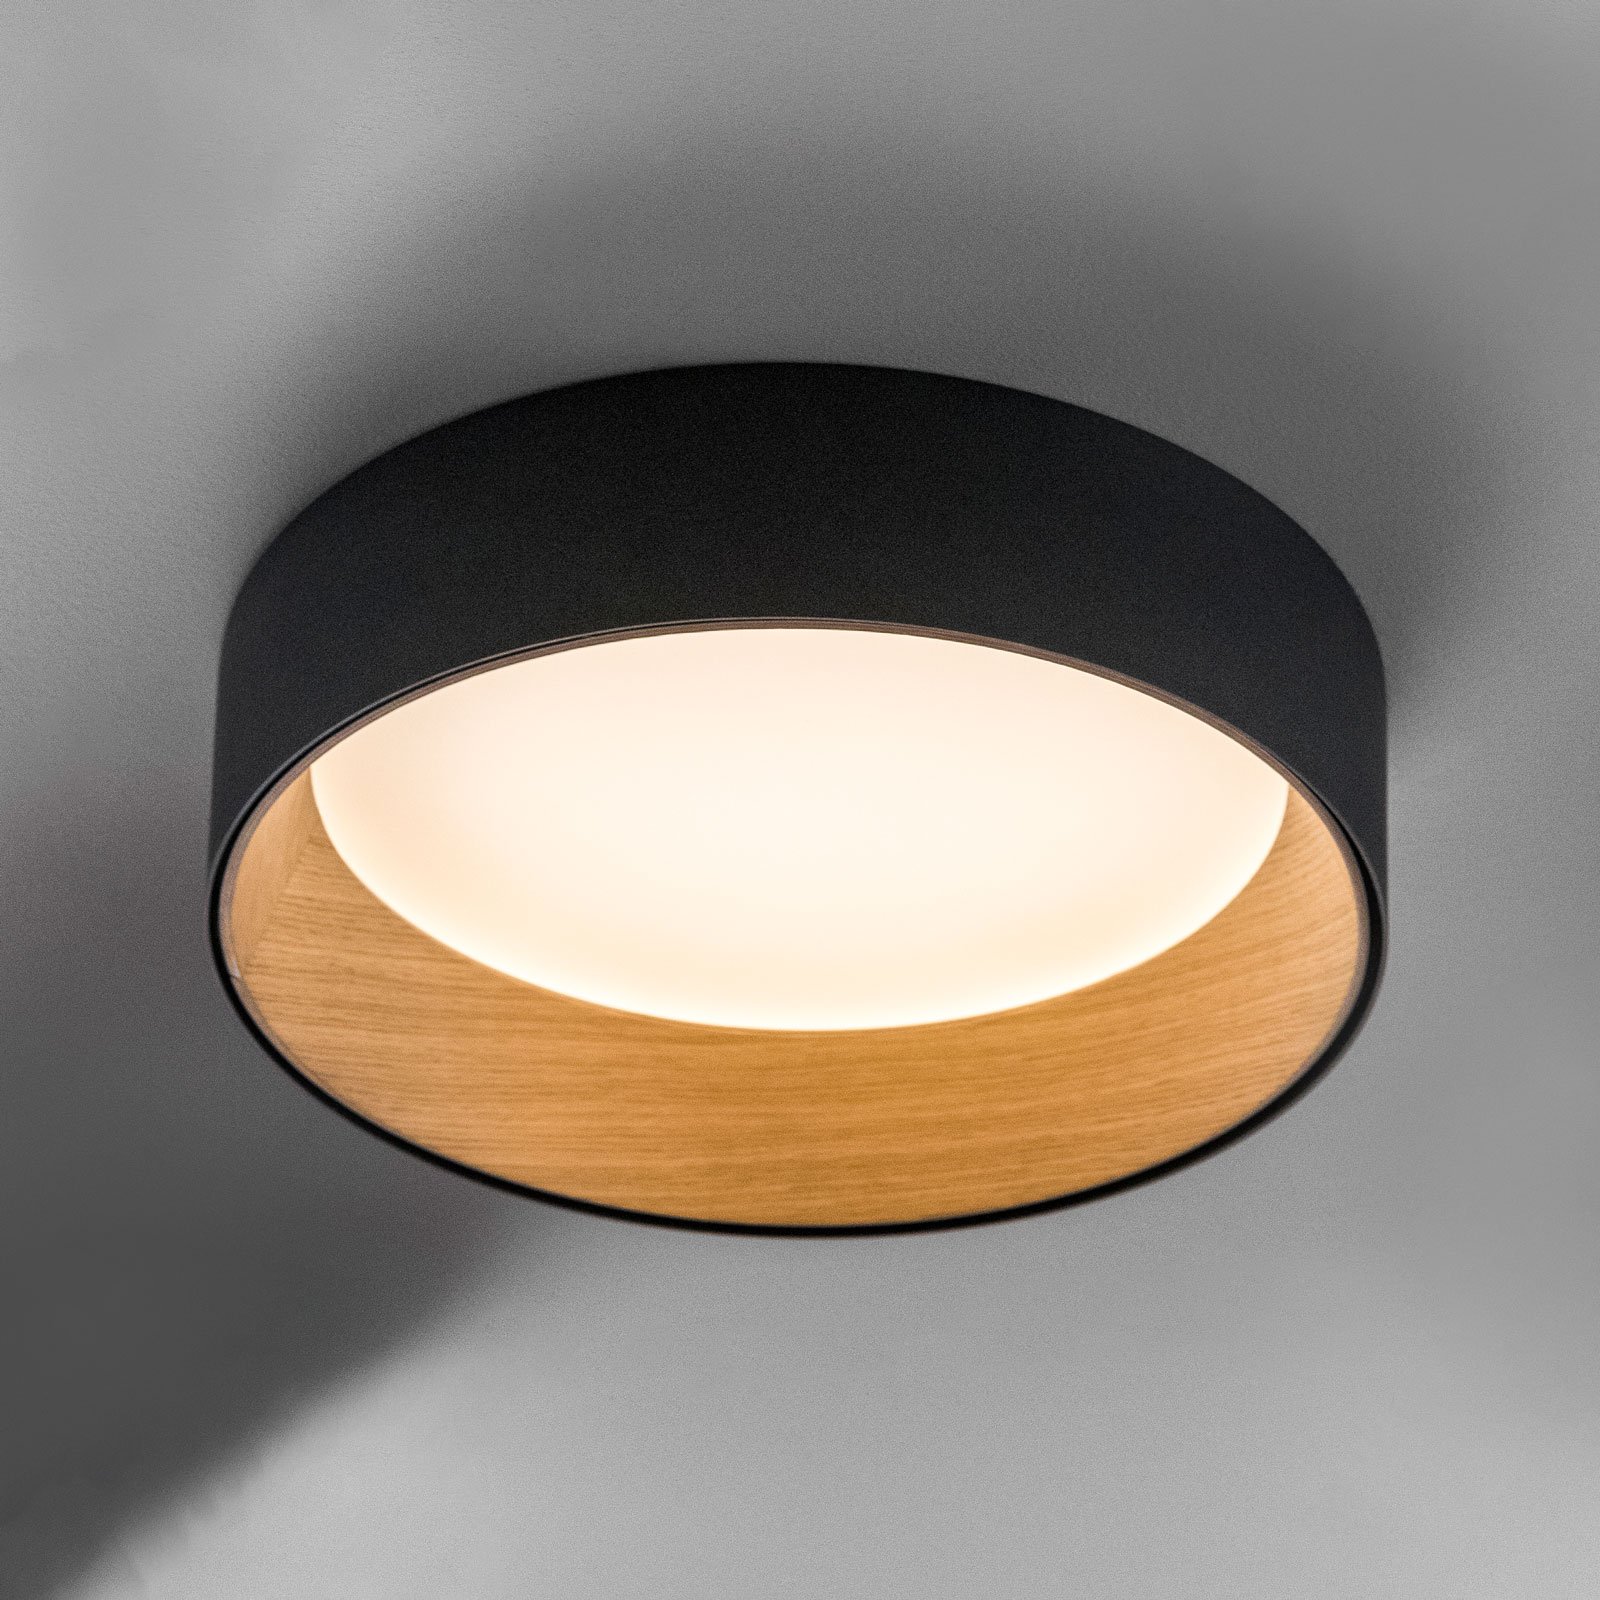 Lampa sufitowa LED Duo 4870 Vibia, szara